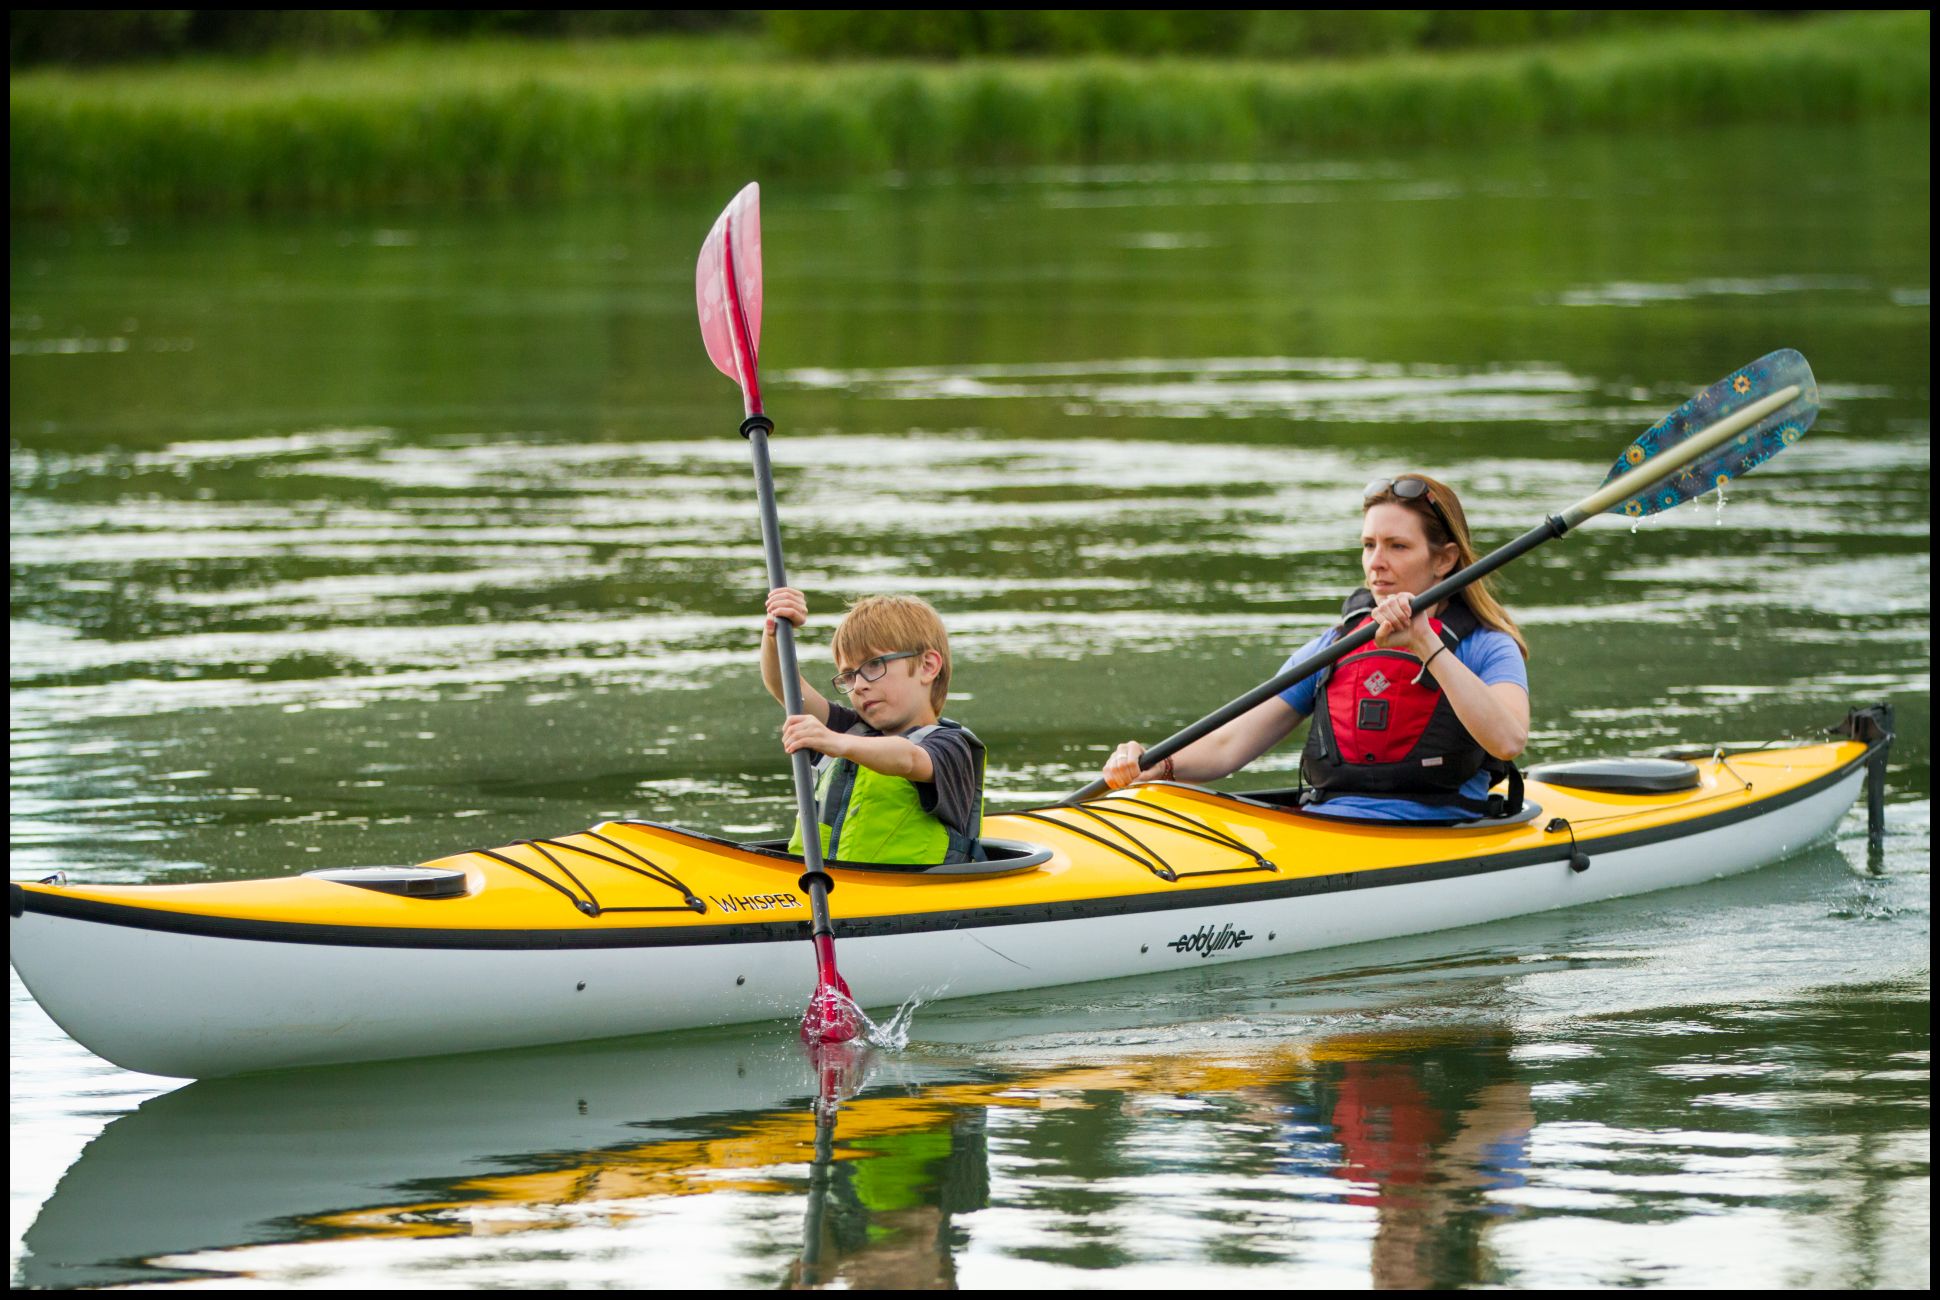 Kayaks: Whisper by Eddyline Kayaks - Image 3295